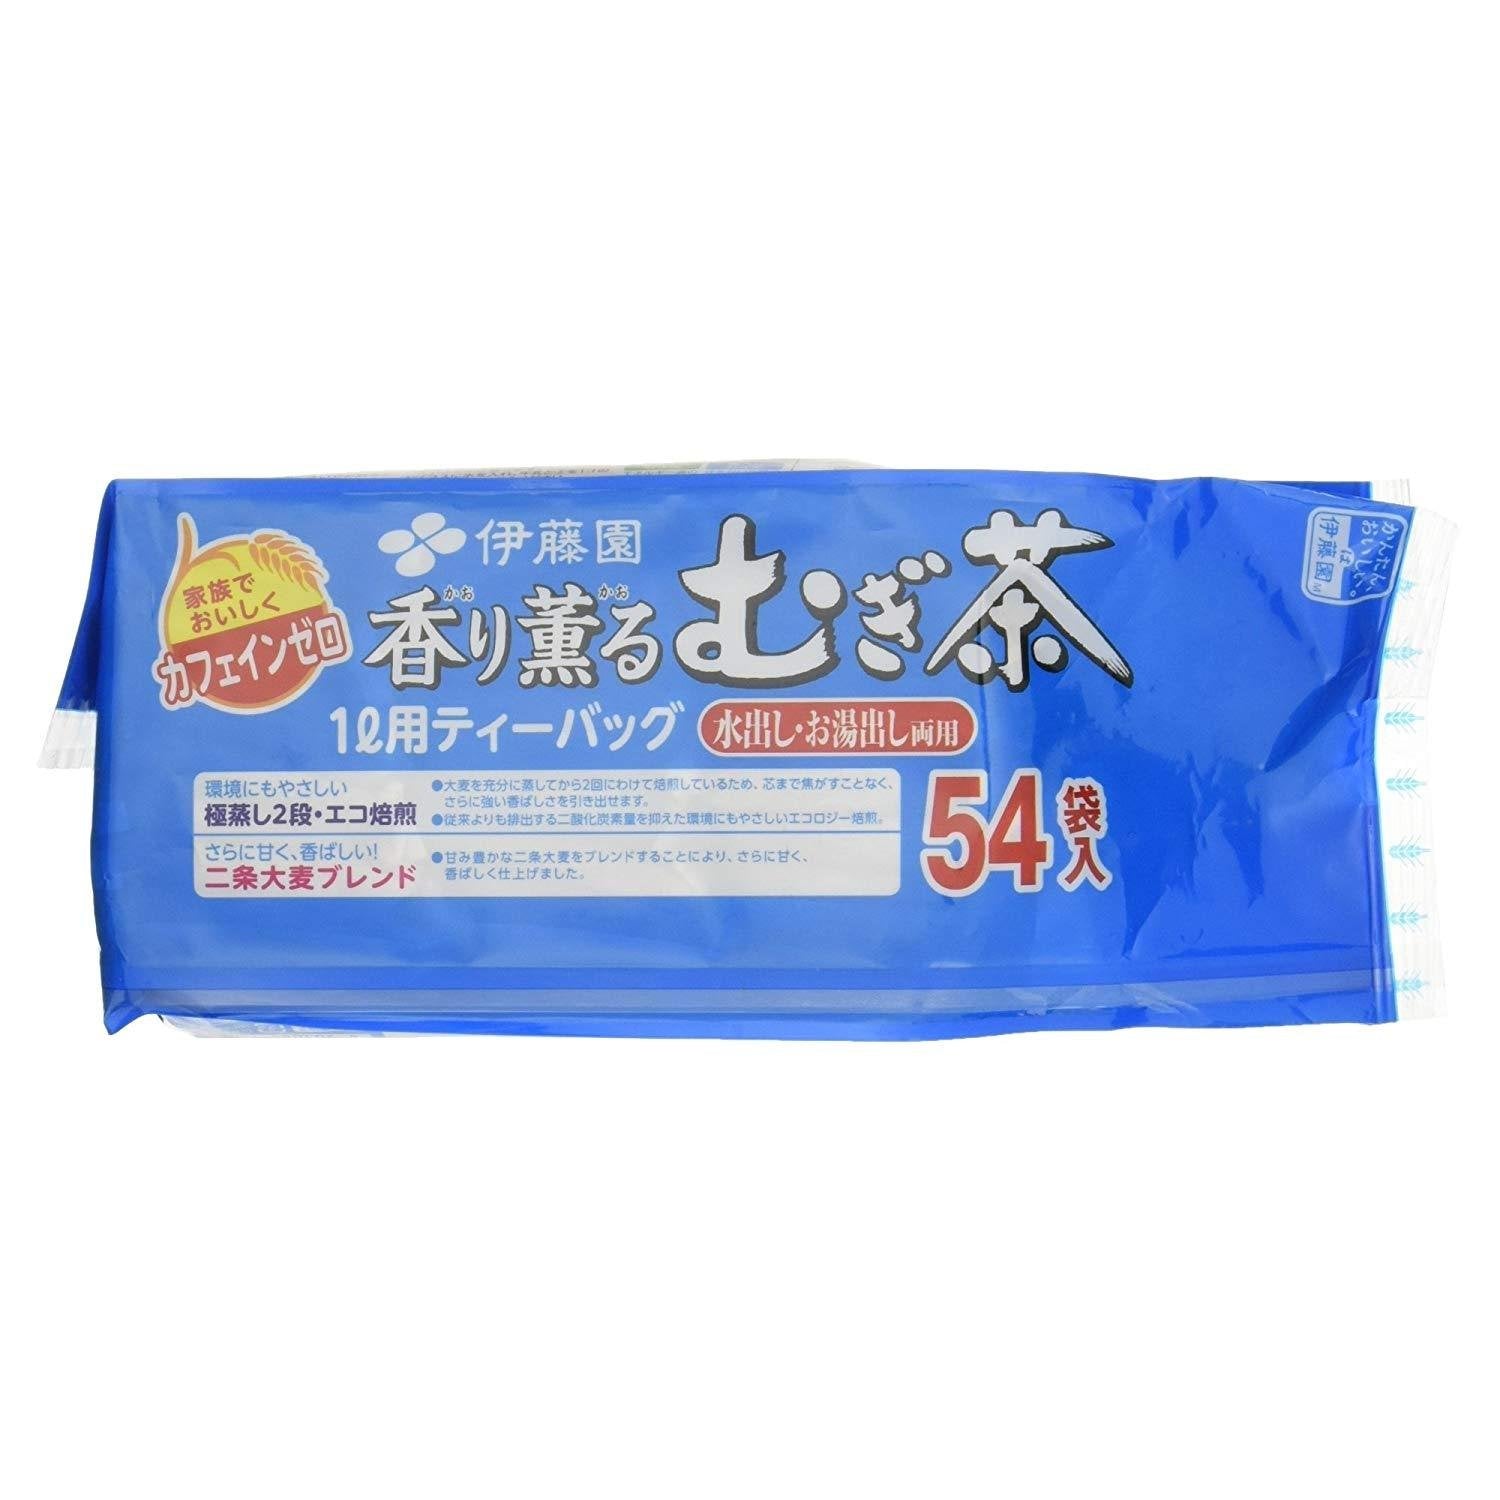 Itoen Mugicha Roasted Barley Tea Caffeine-Free 54 bags